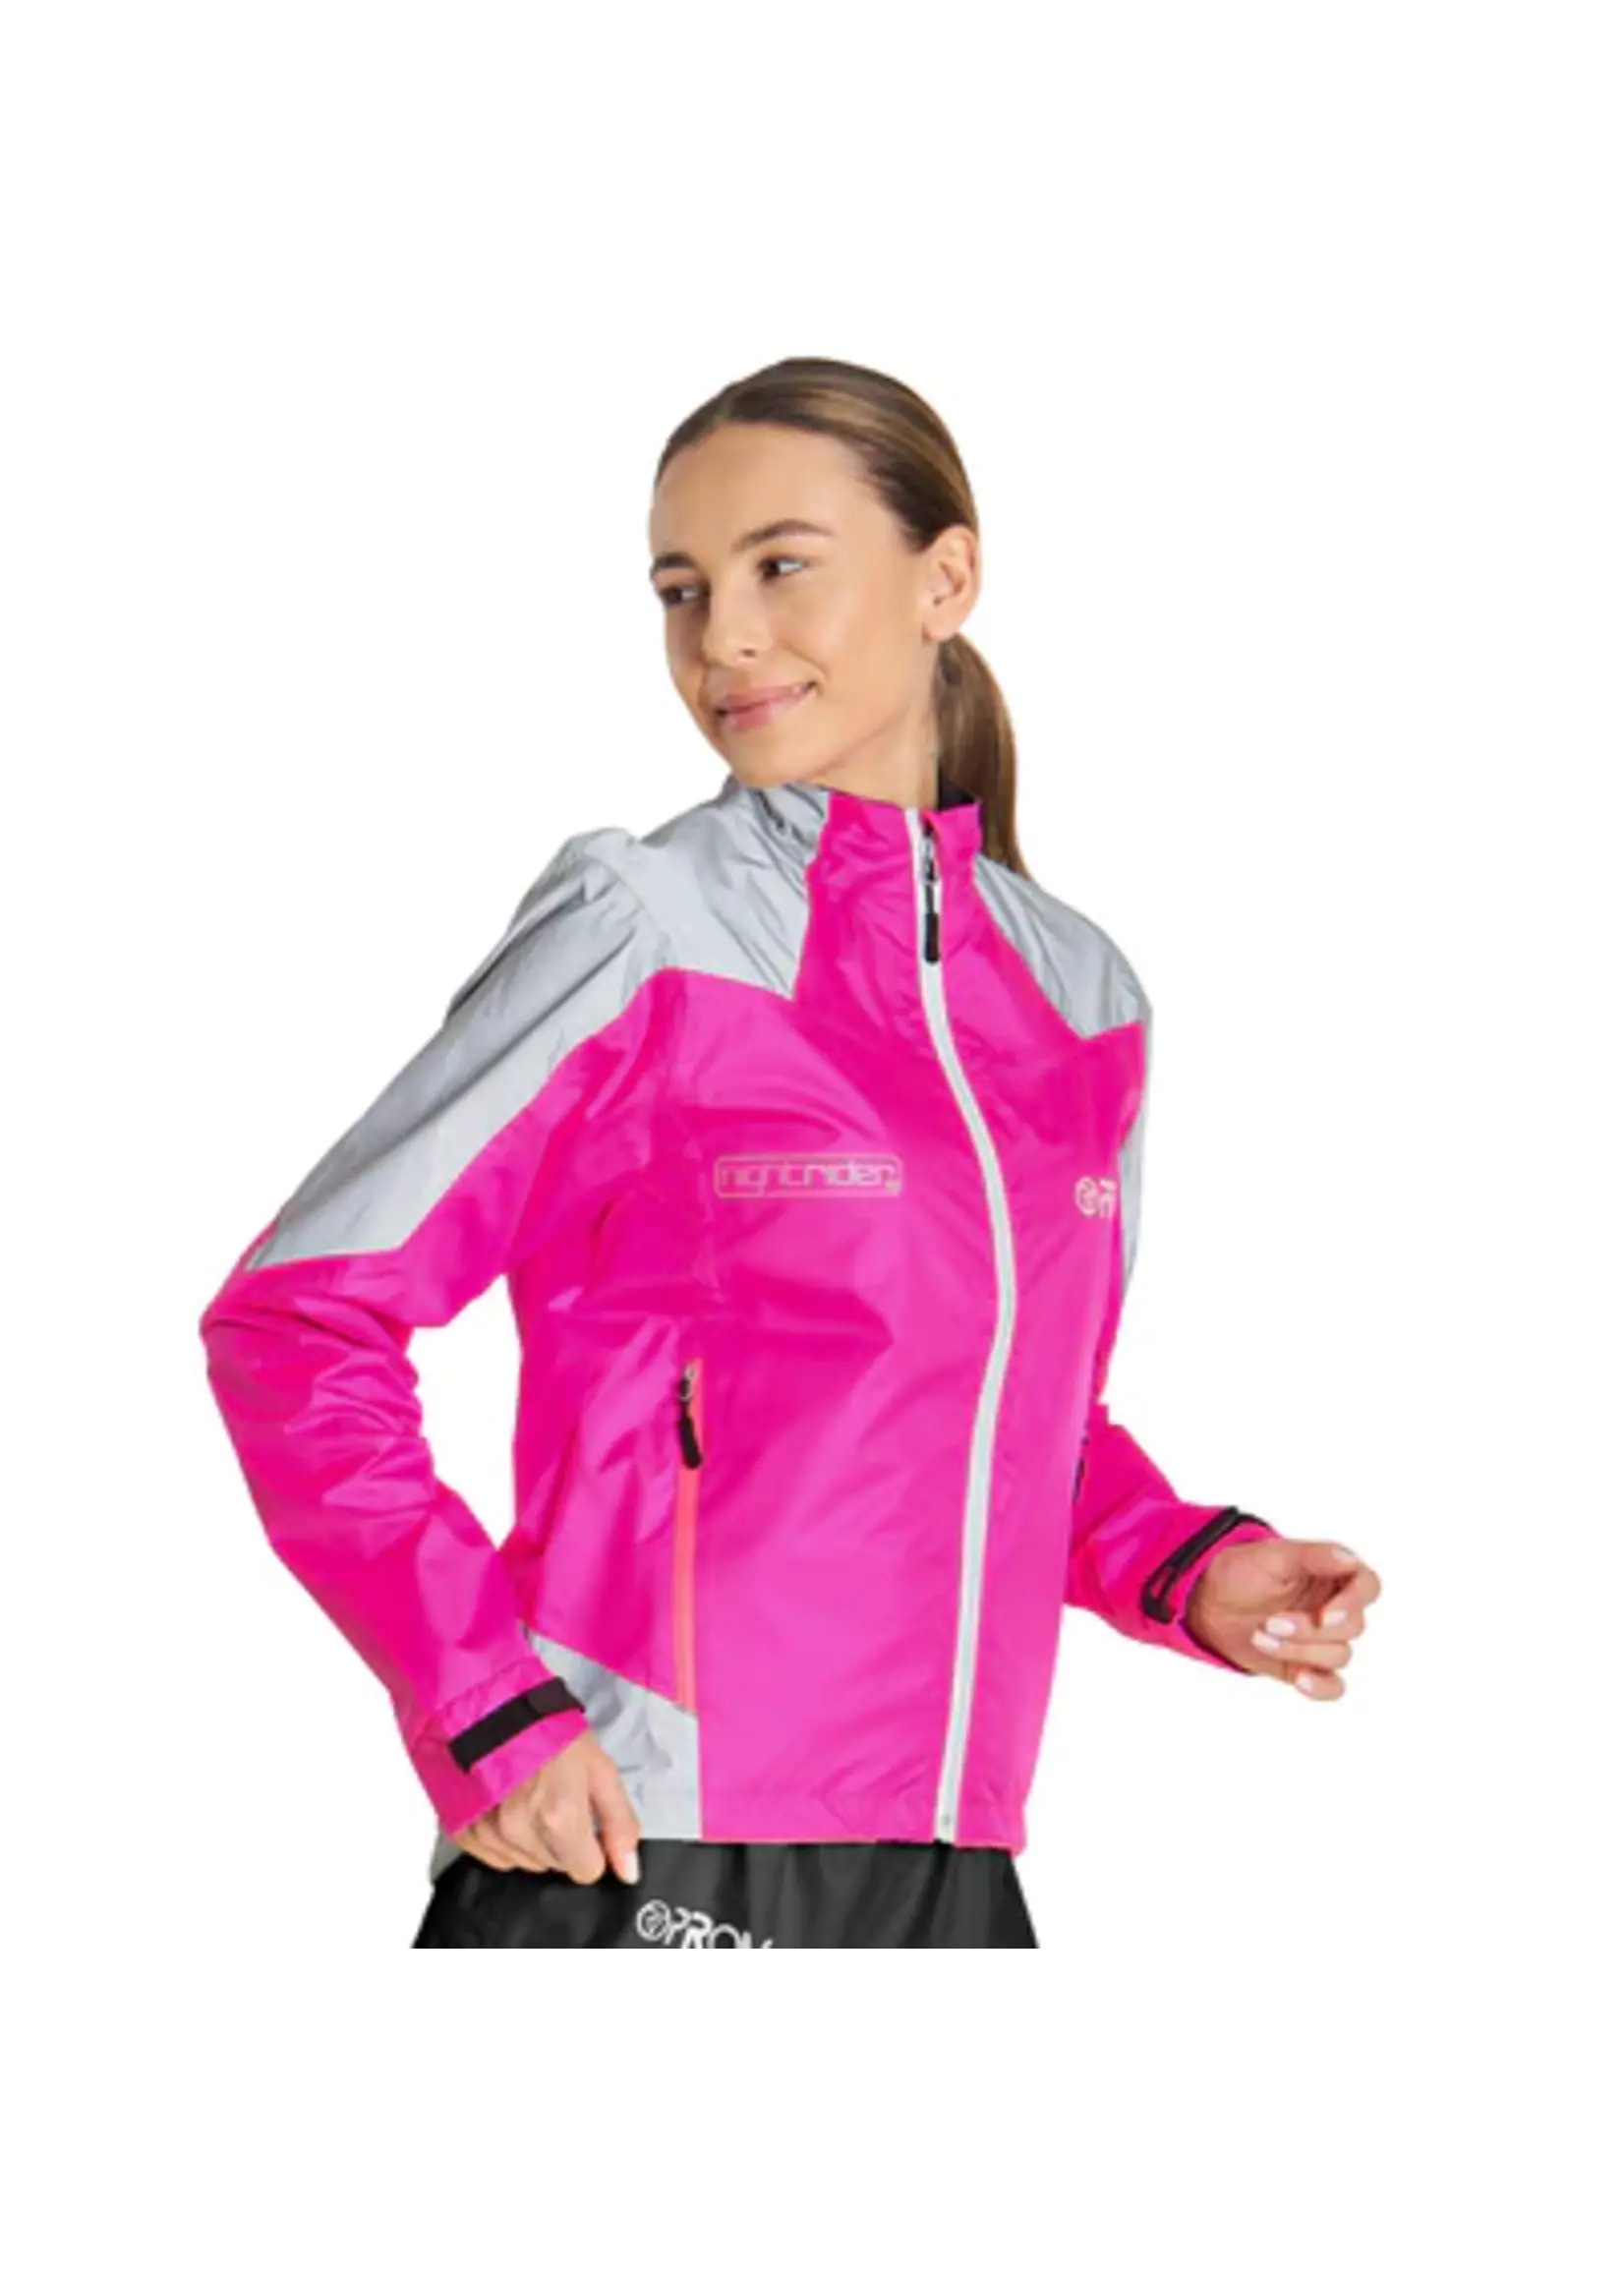 PROVIZ Nightrider 2.0 Jacket Womens Pink